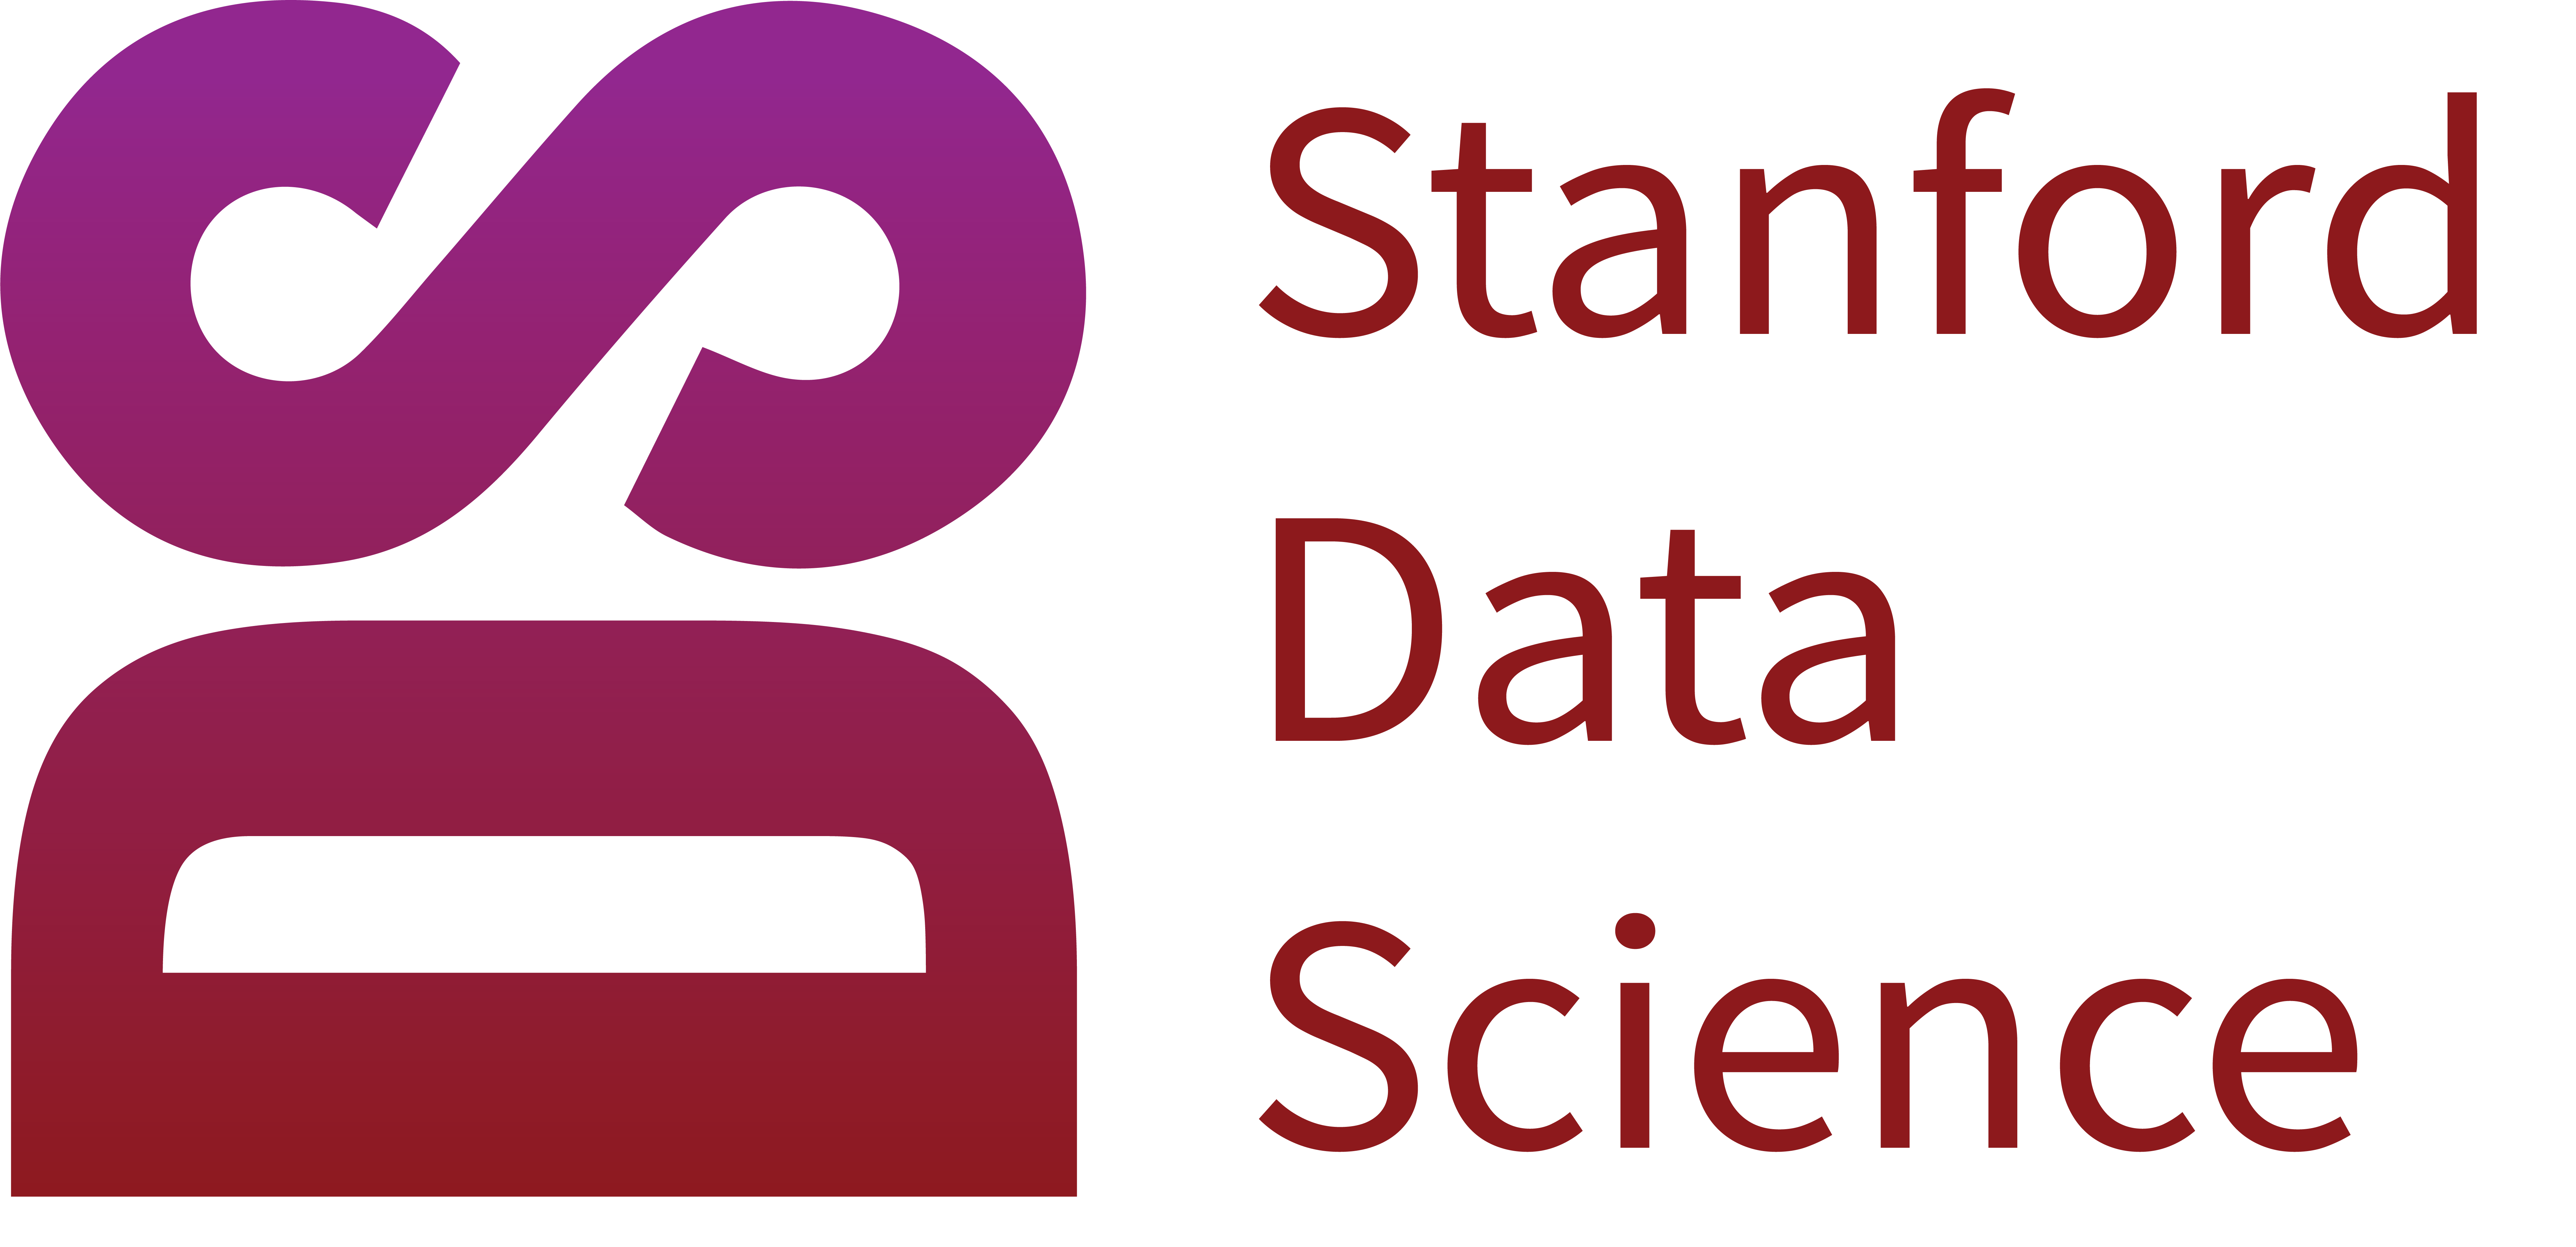 Stanford Data Science logo